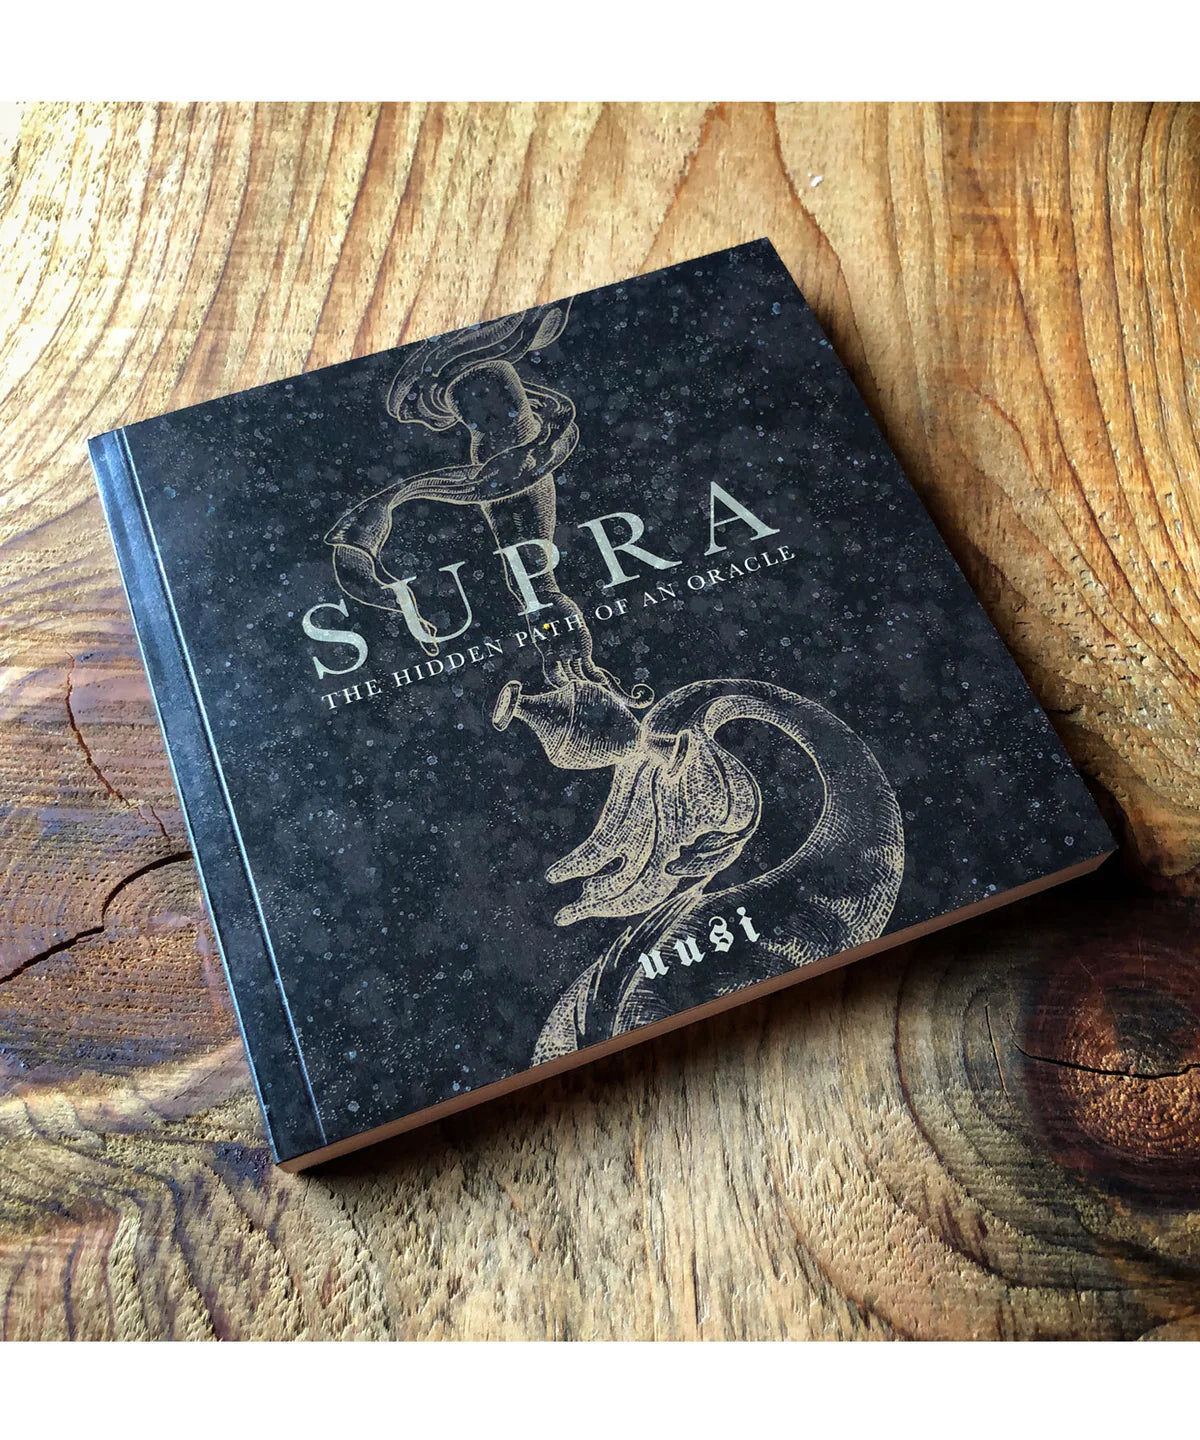 "Supra: The Hidden Path of an Oracle" Book